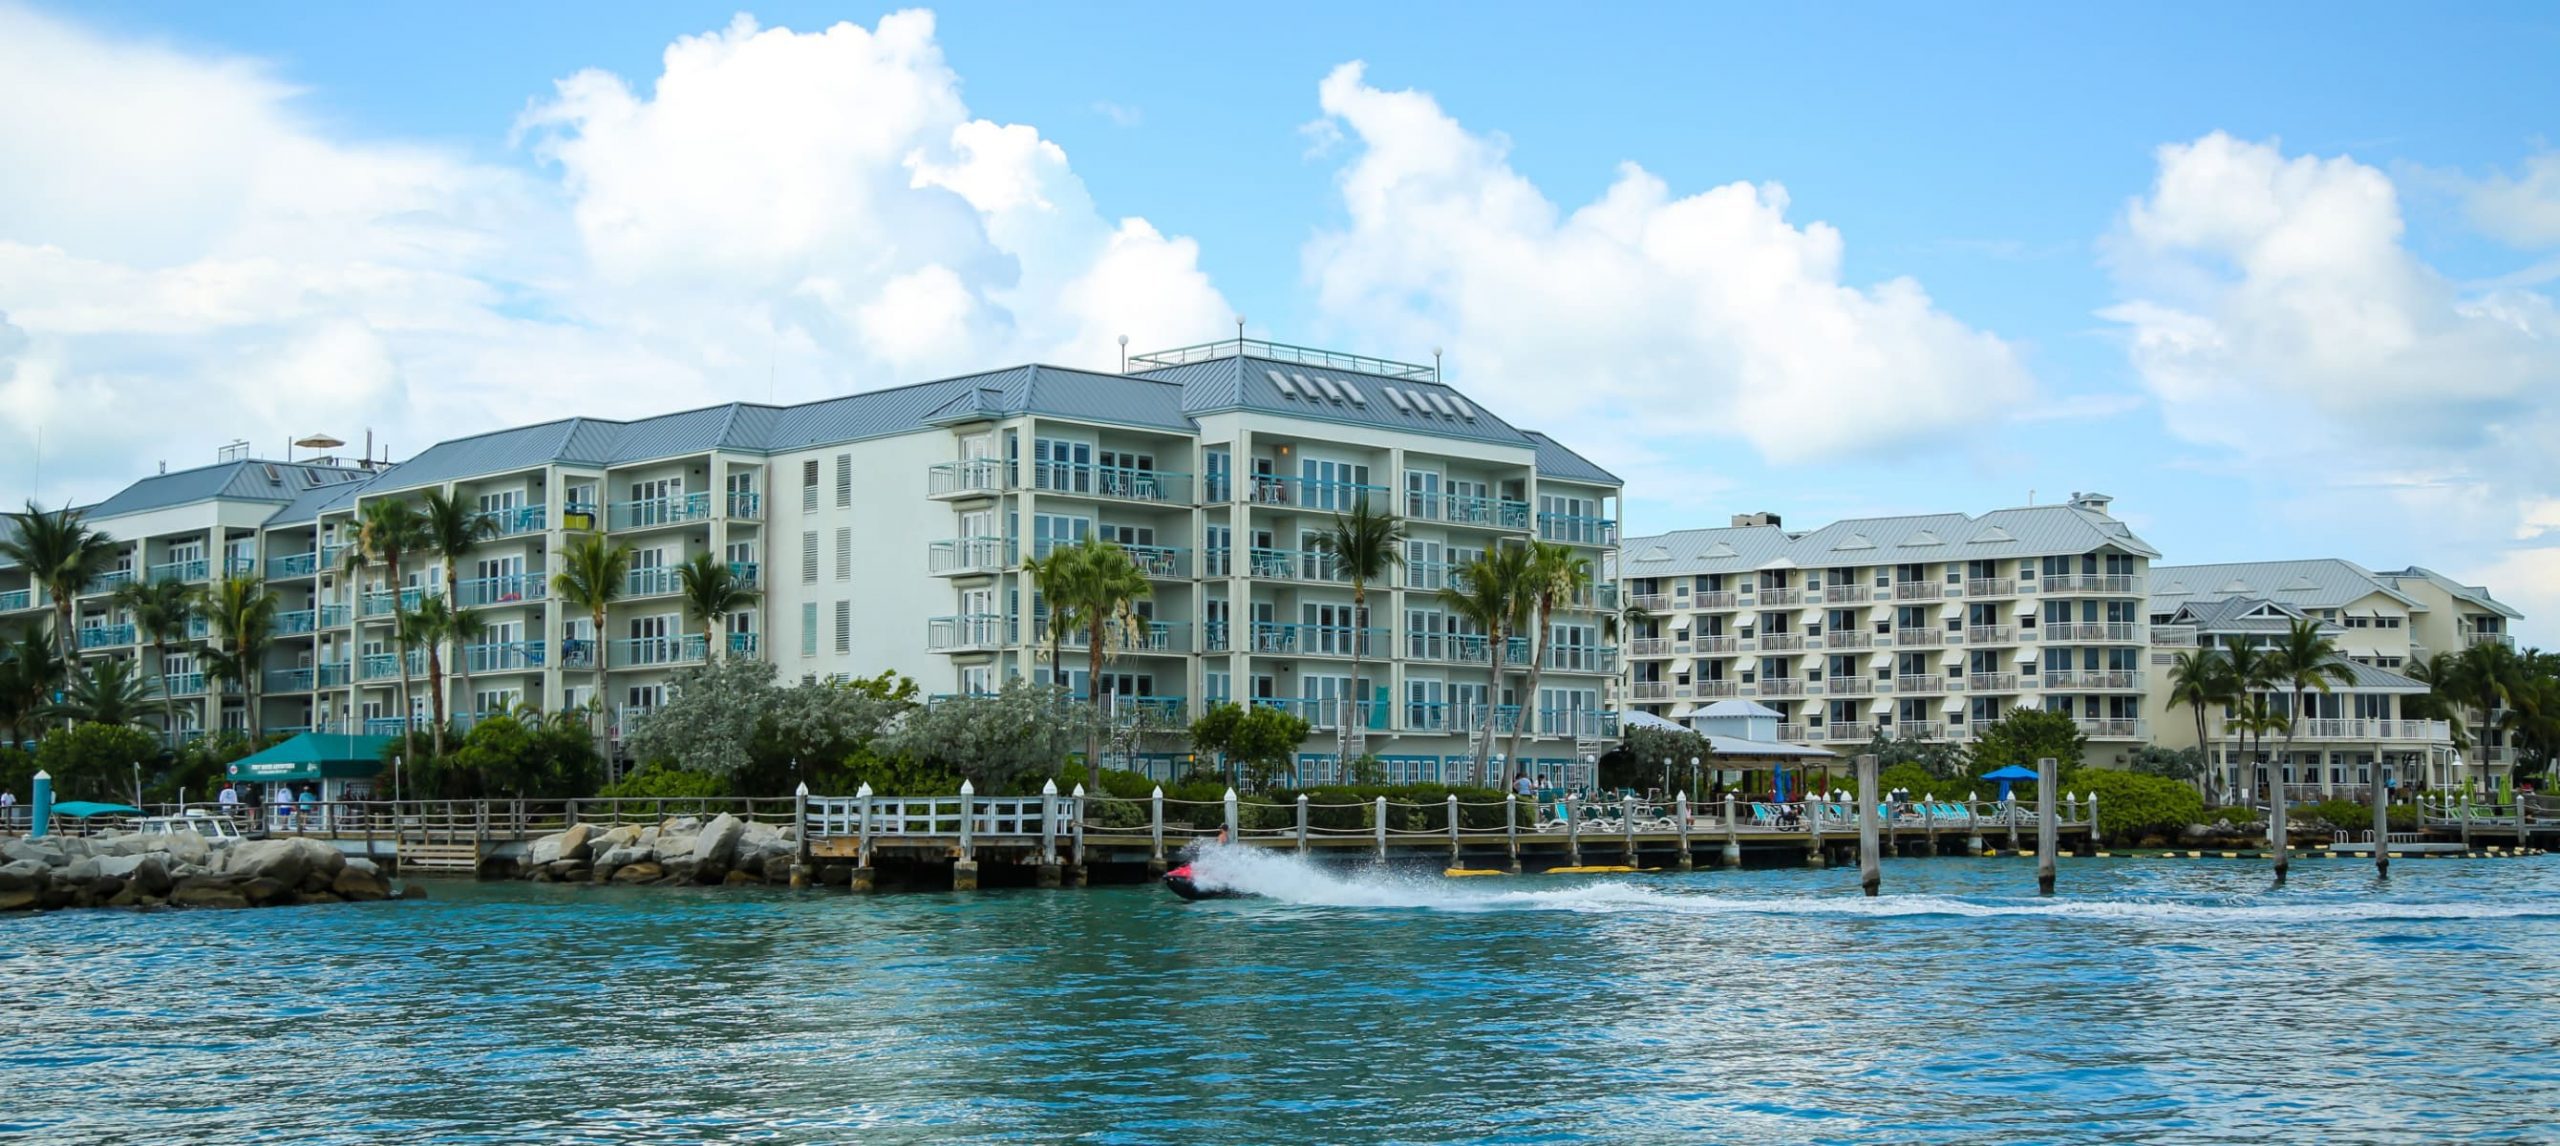 Resort in Key West, Florida.